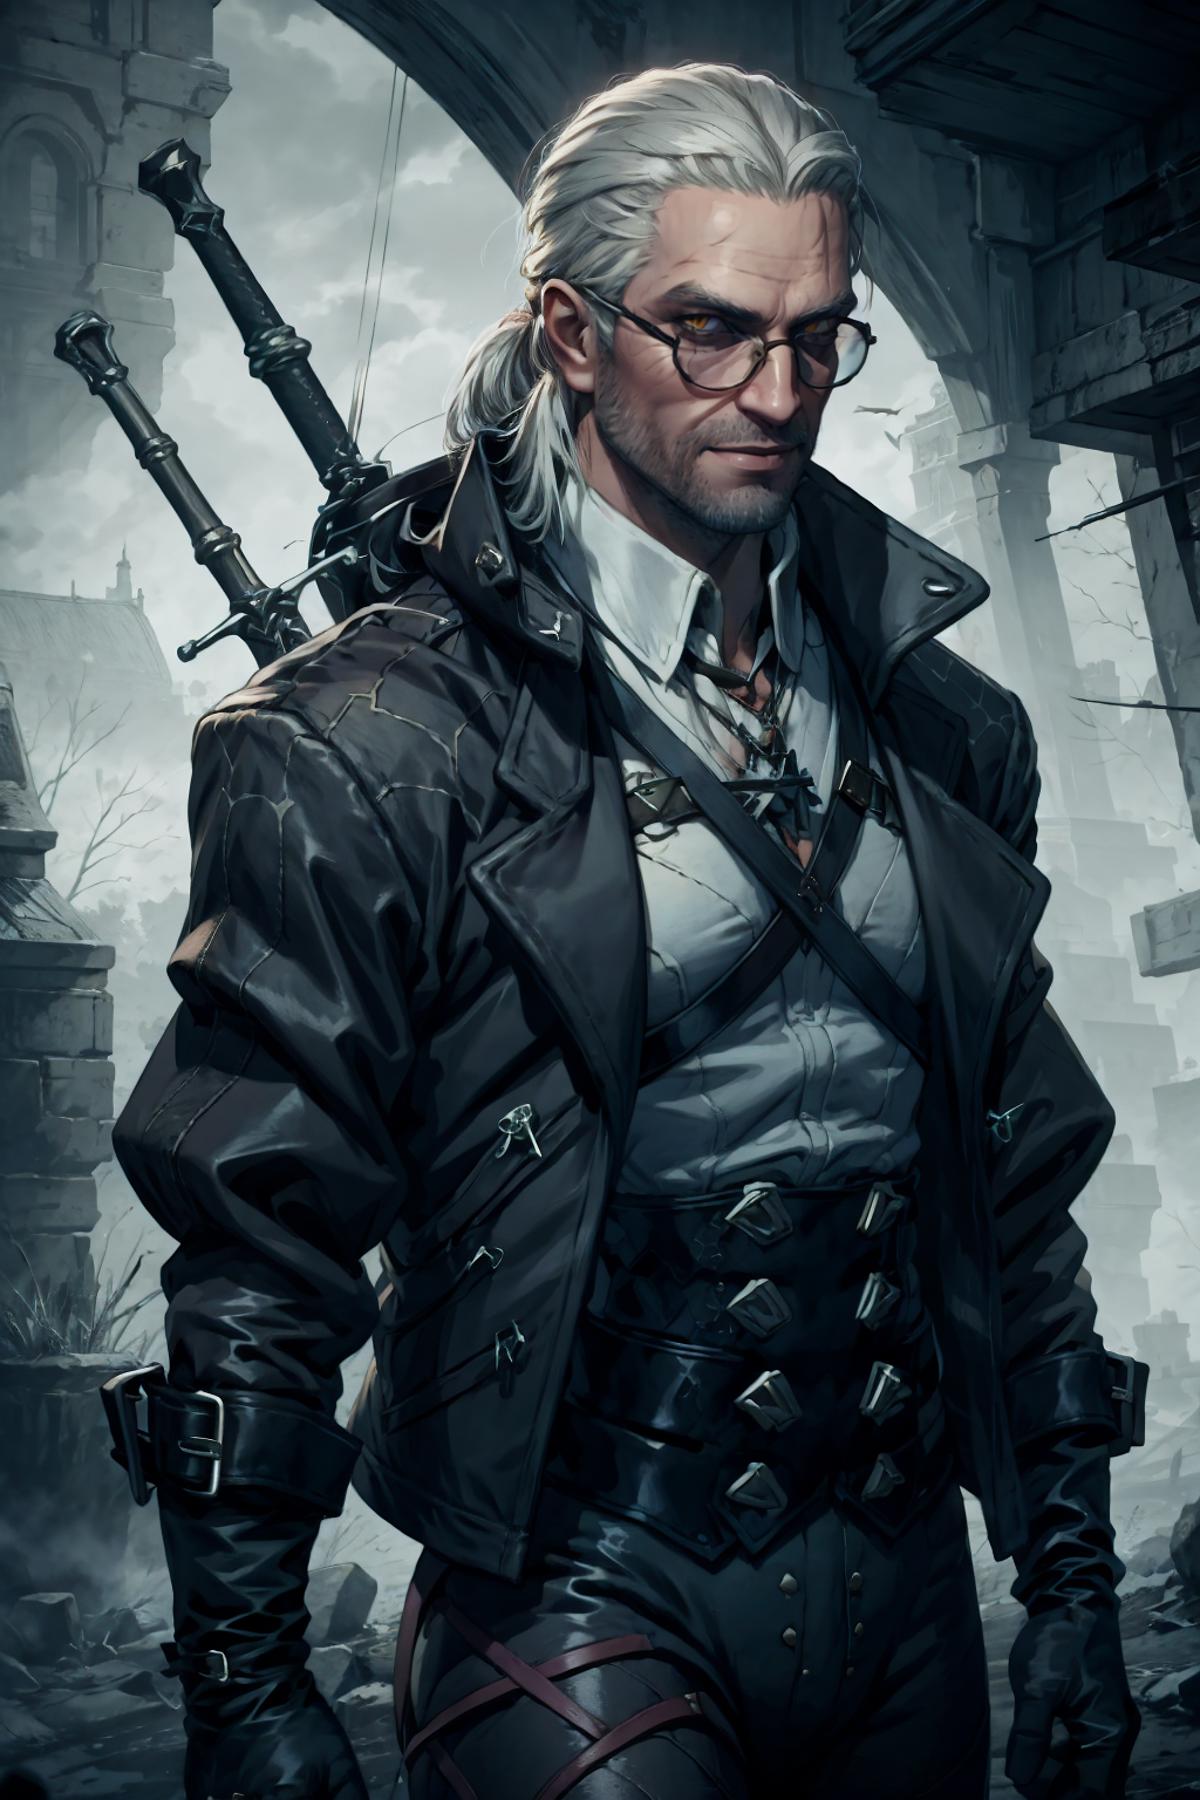 Geralt of Rivia  |  The Witcher 3 : Wild Hunt image by FallenIncursio